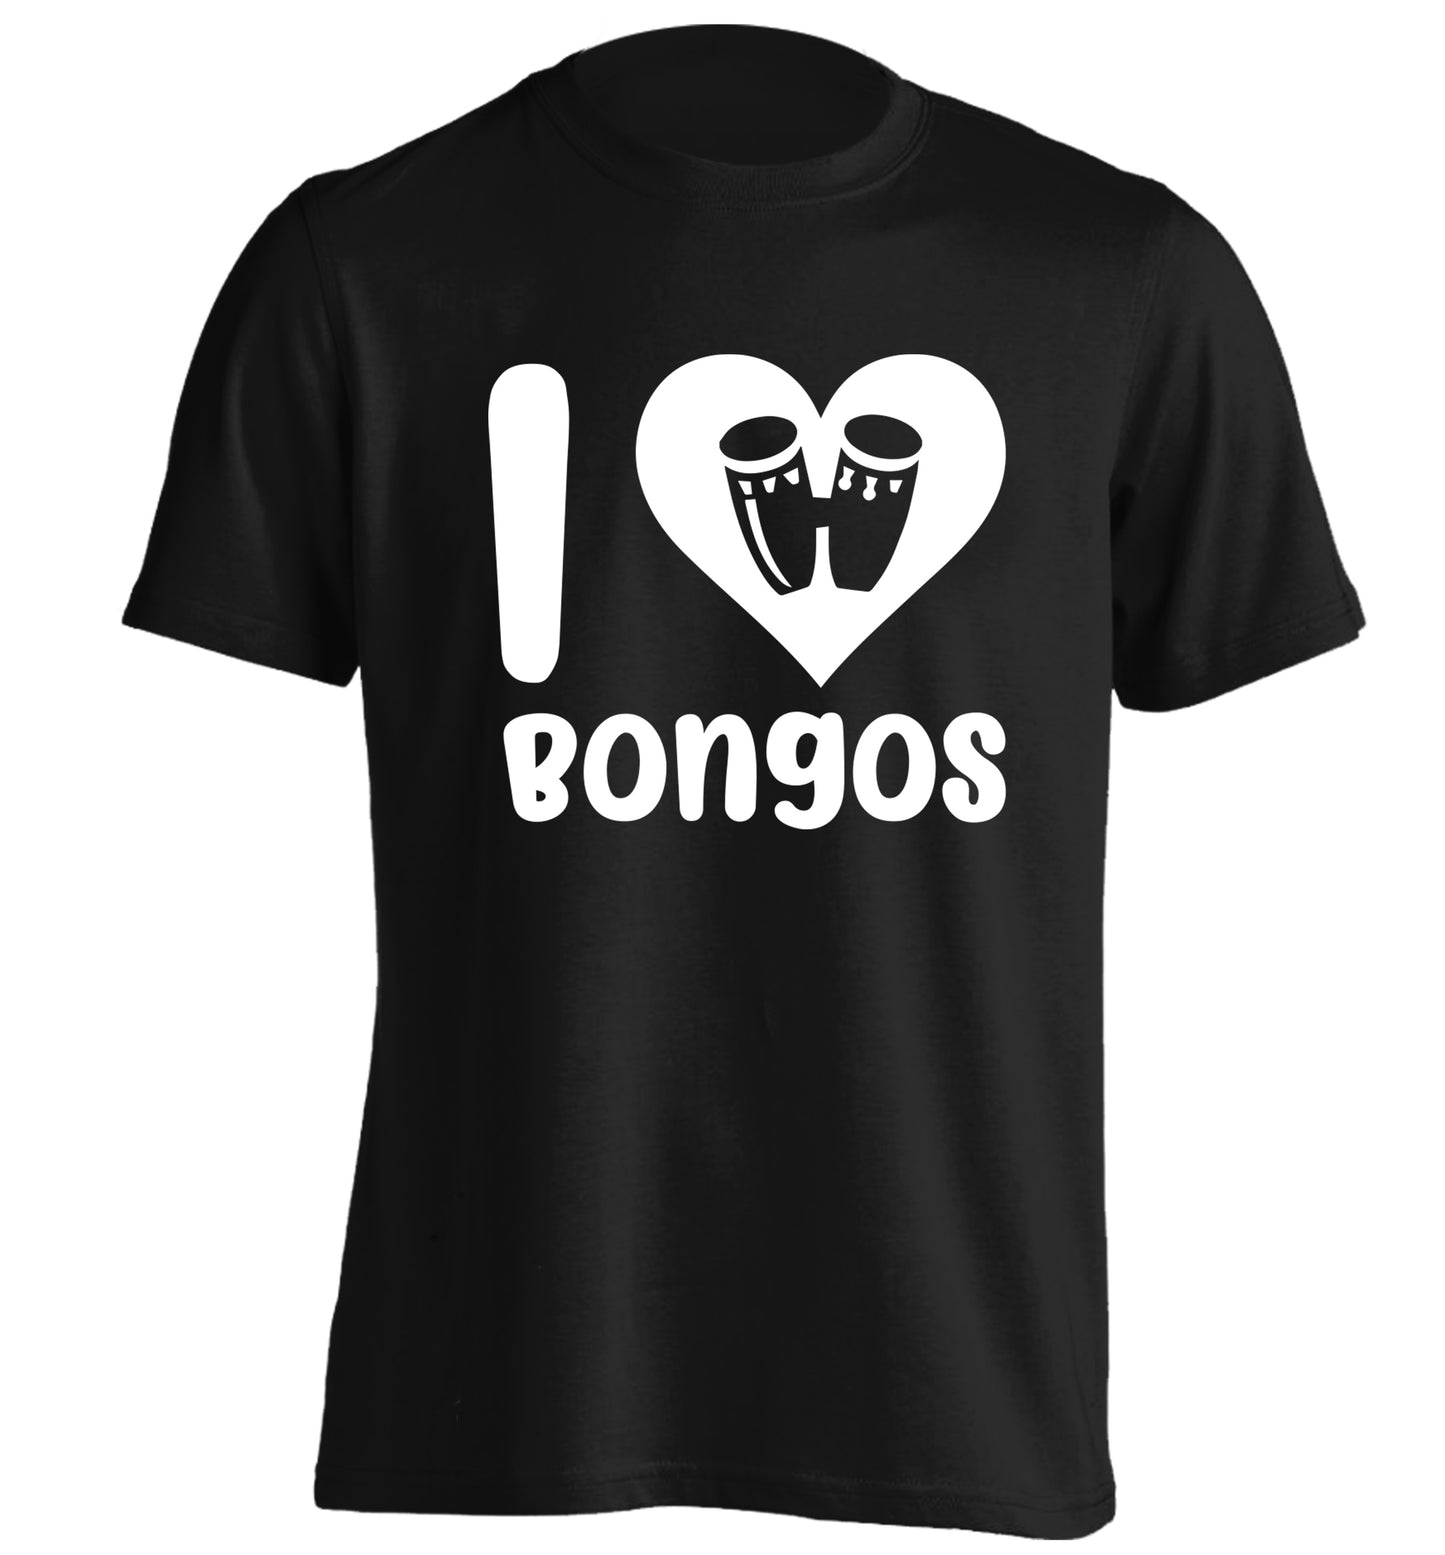 I love bongos adults unisex black Tshirt 2XL